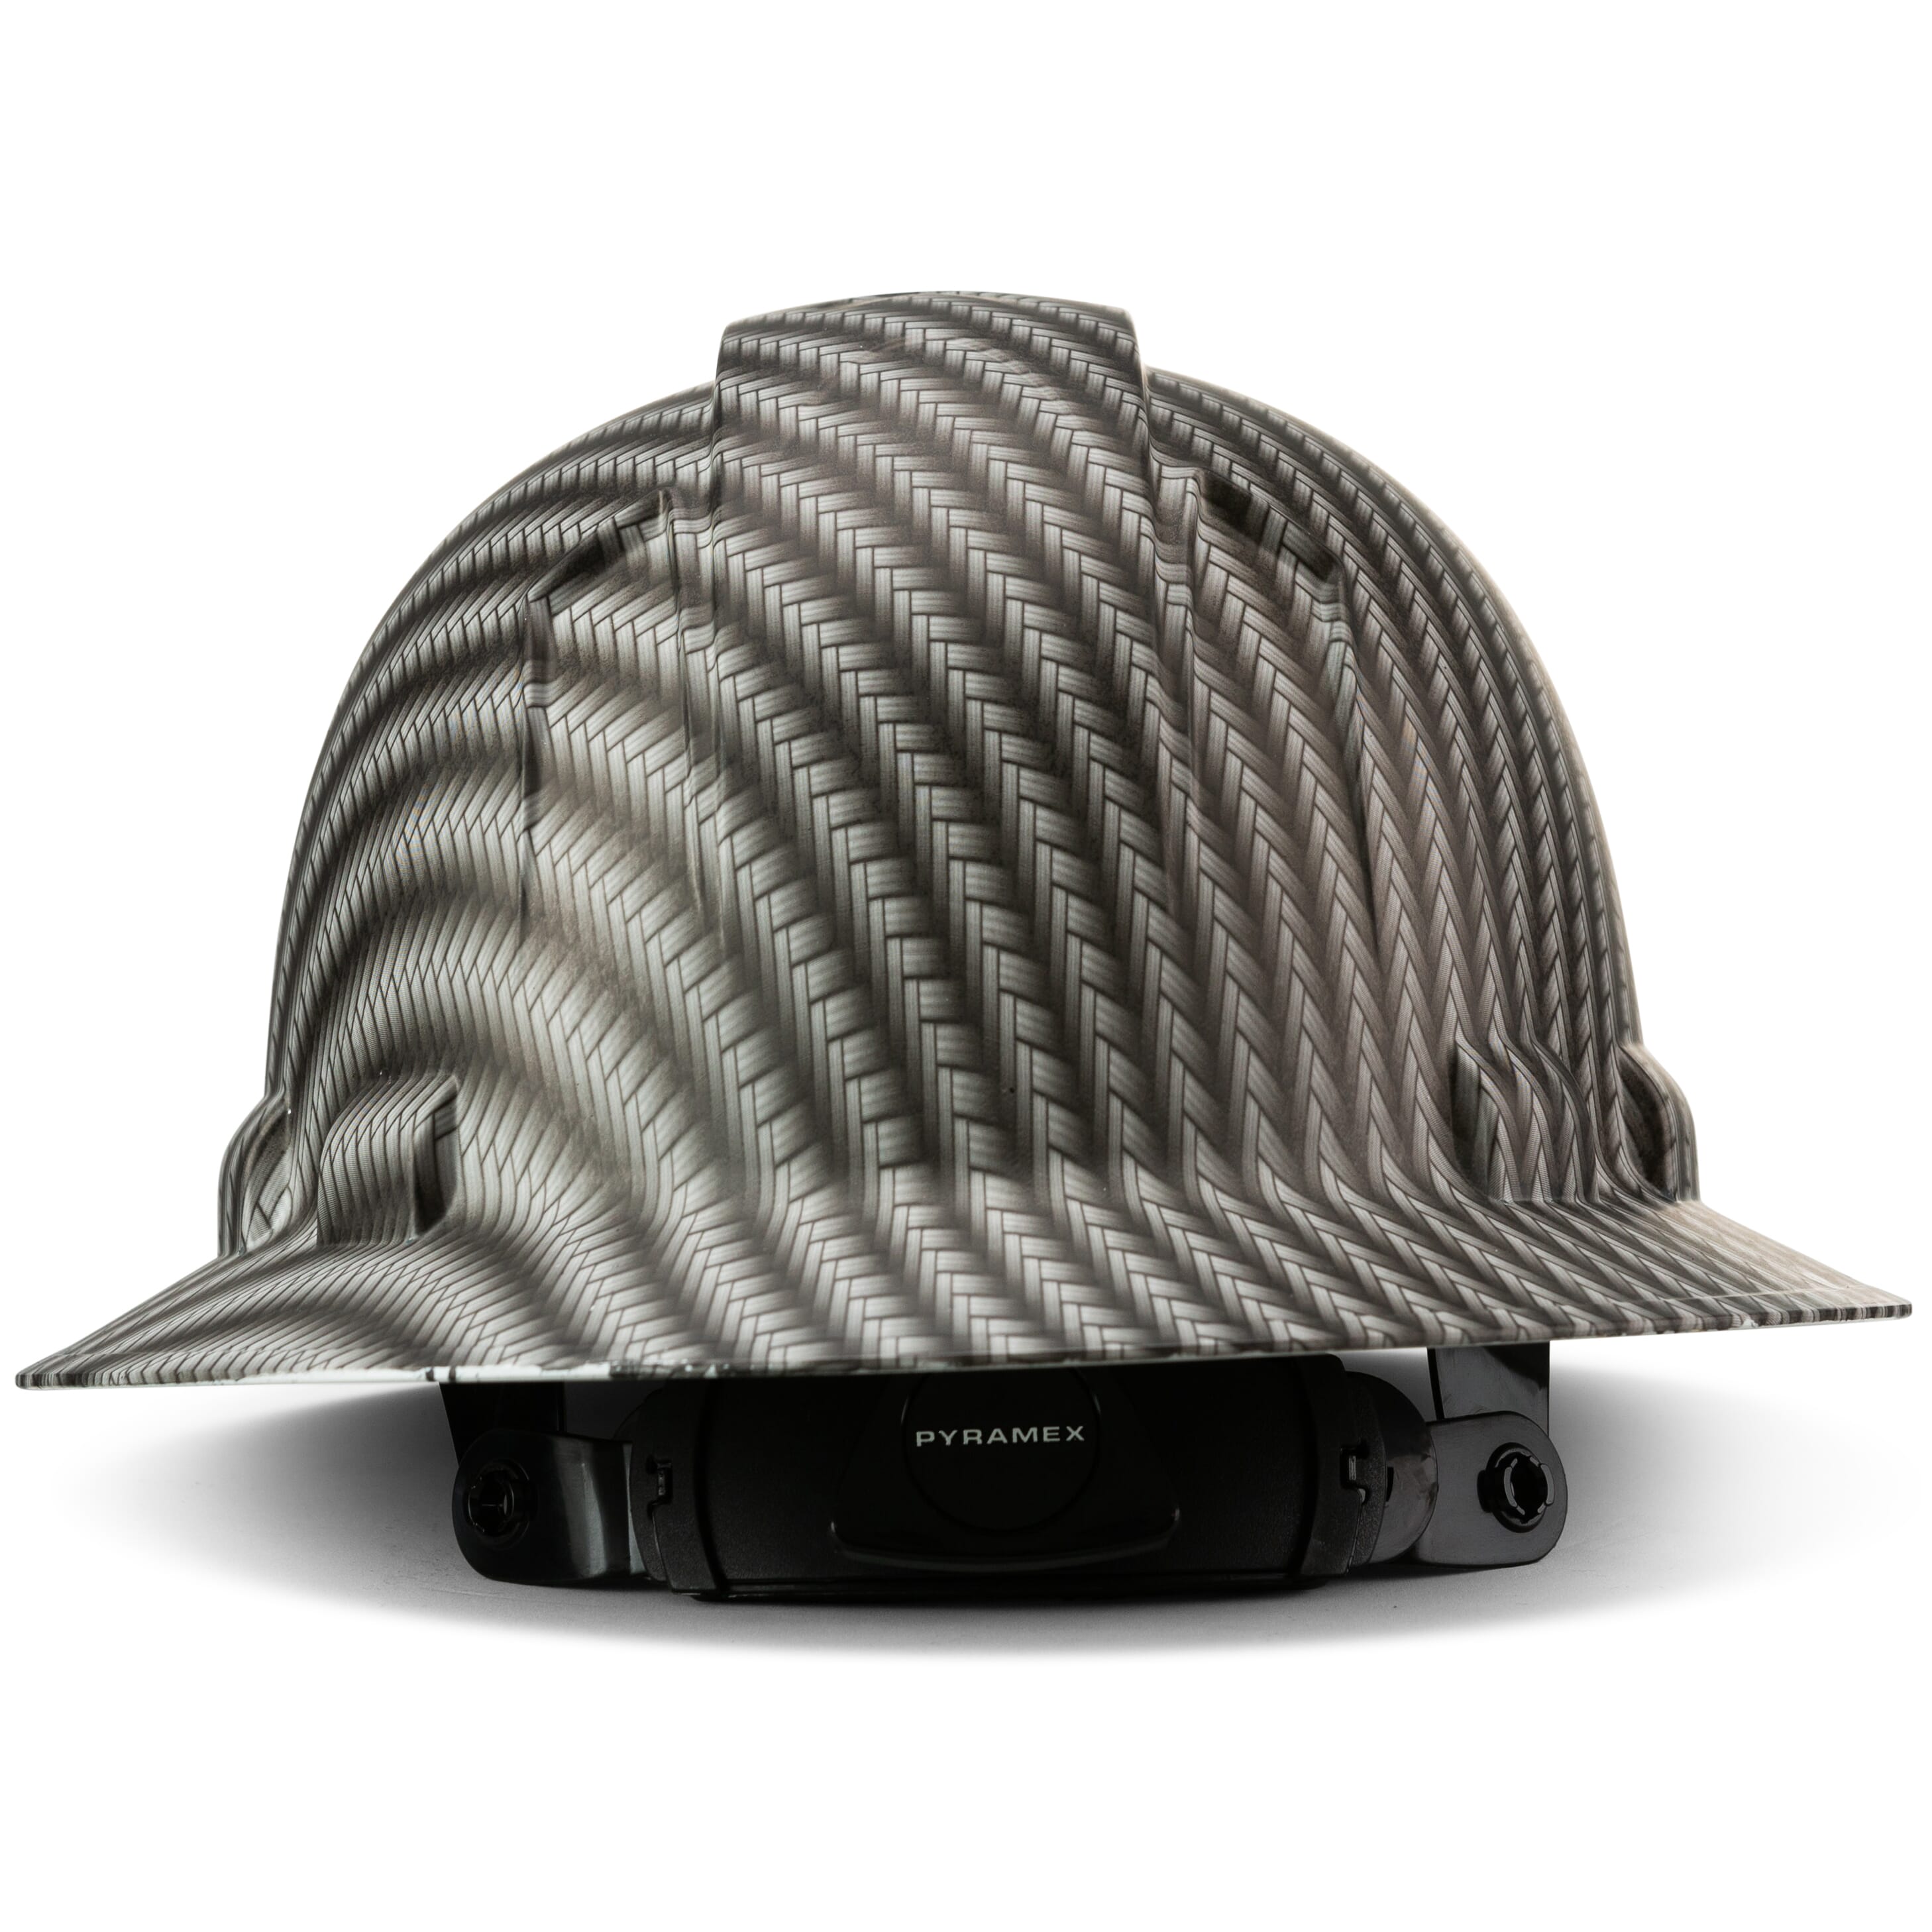 Full Brim Pyramex Hard Hat, Custom Tire Track Design, Safety Helmet, 6 Point